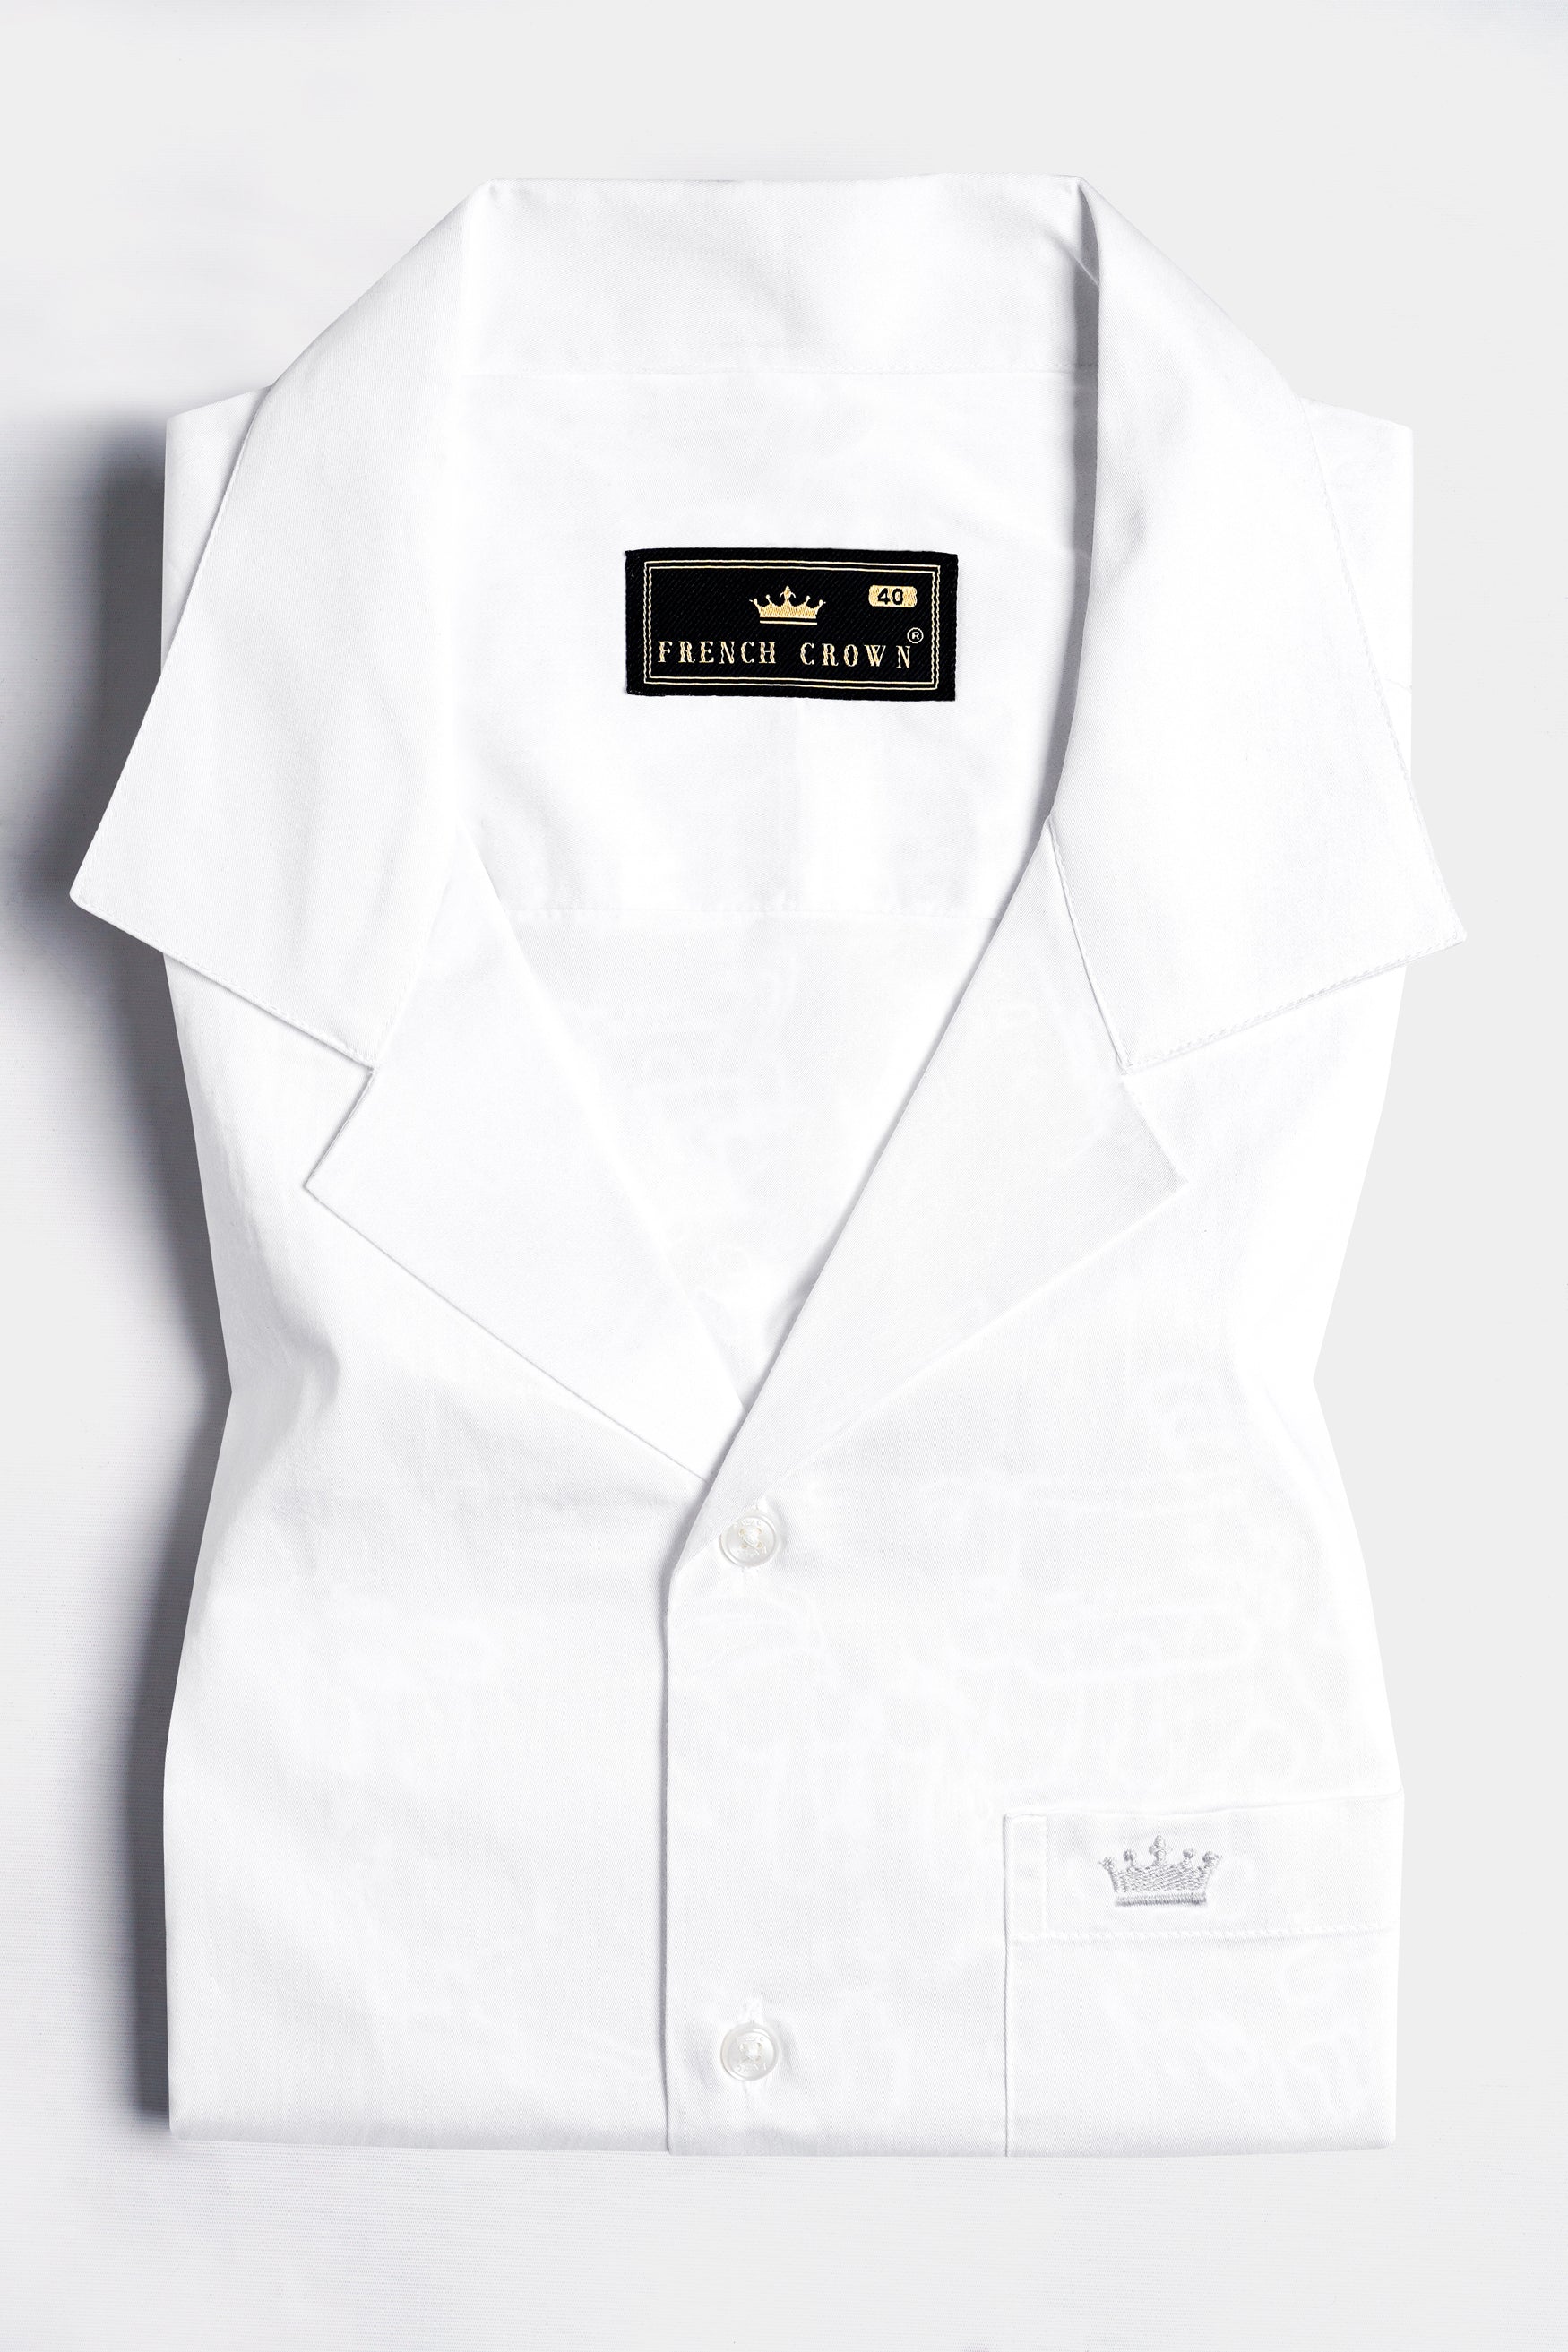 Bright White Premium Cotton Half Sleeved Shirt 11996-CC-SS-38, 11996-CC-SS-39, 11996-CC-SS-40, 11996-CC-SS-42, 11996-CC-SS-44, 11996-CC-SS-46, 11996-CC-SS-48, 11996-CC-SS-50, 11996-CC-SS-52